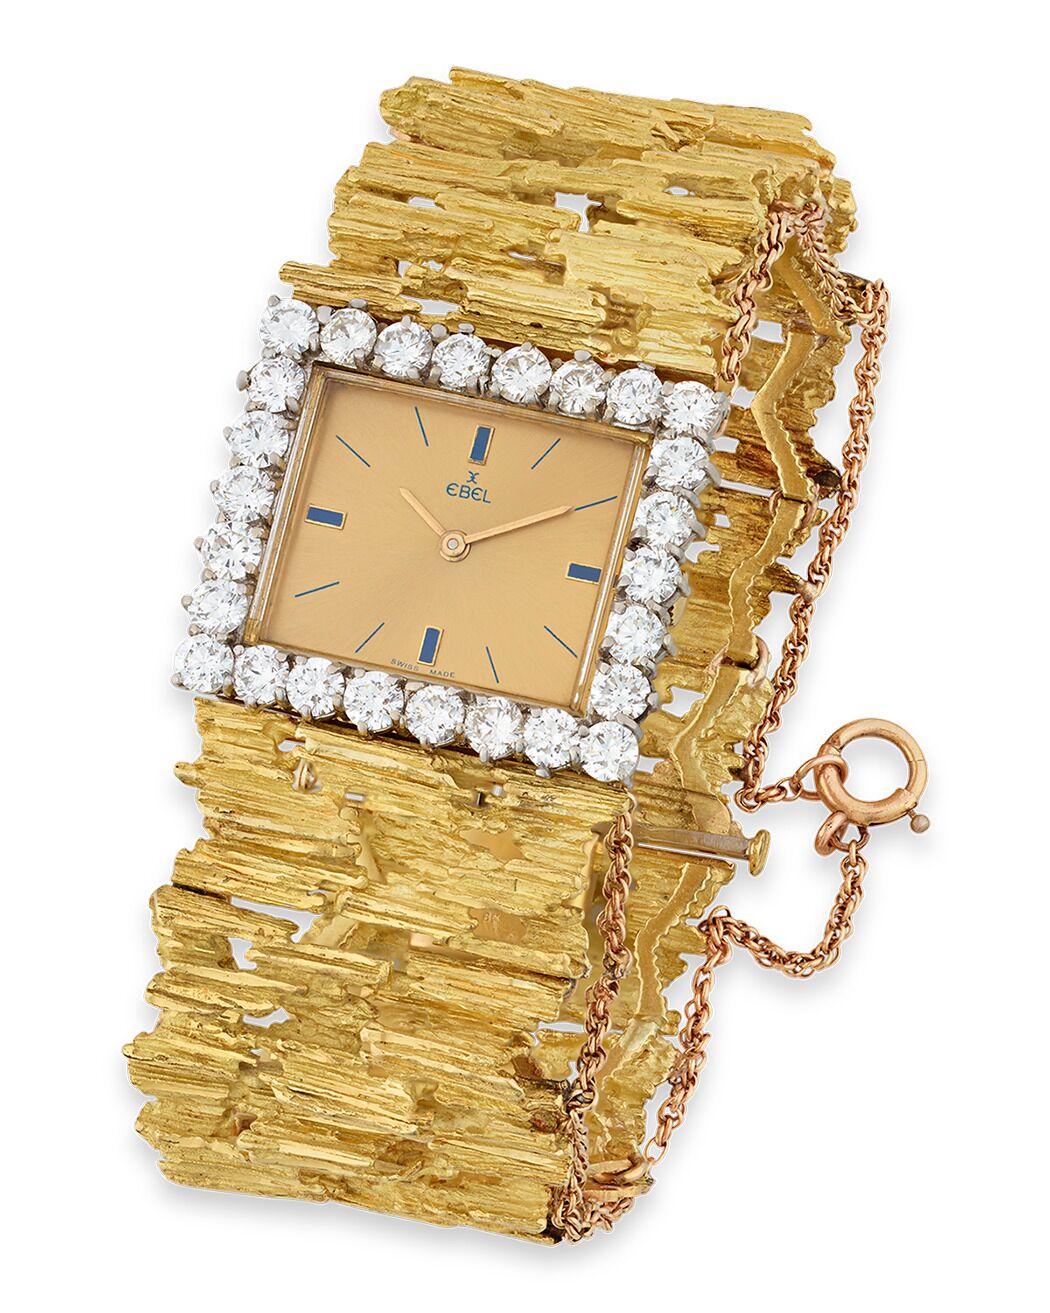 Elvis Presley Gold Wristwatch Sold